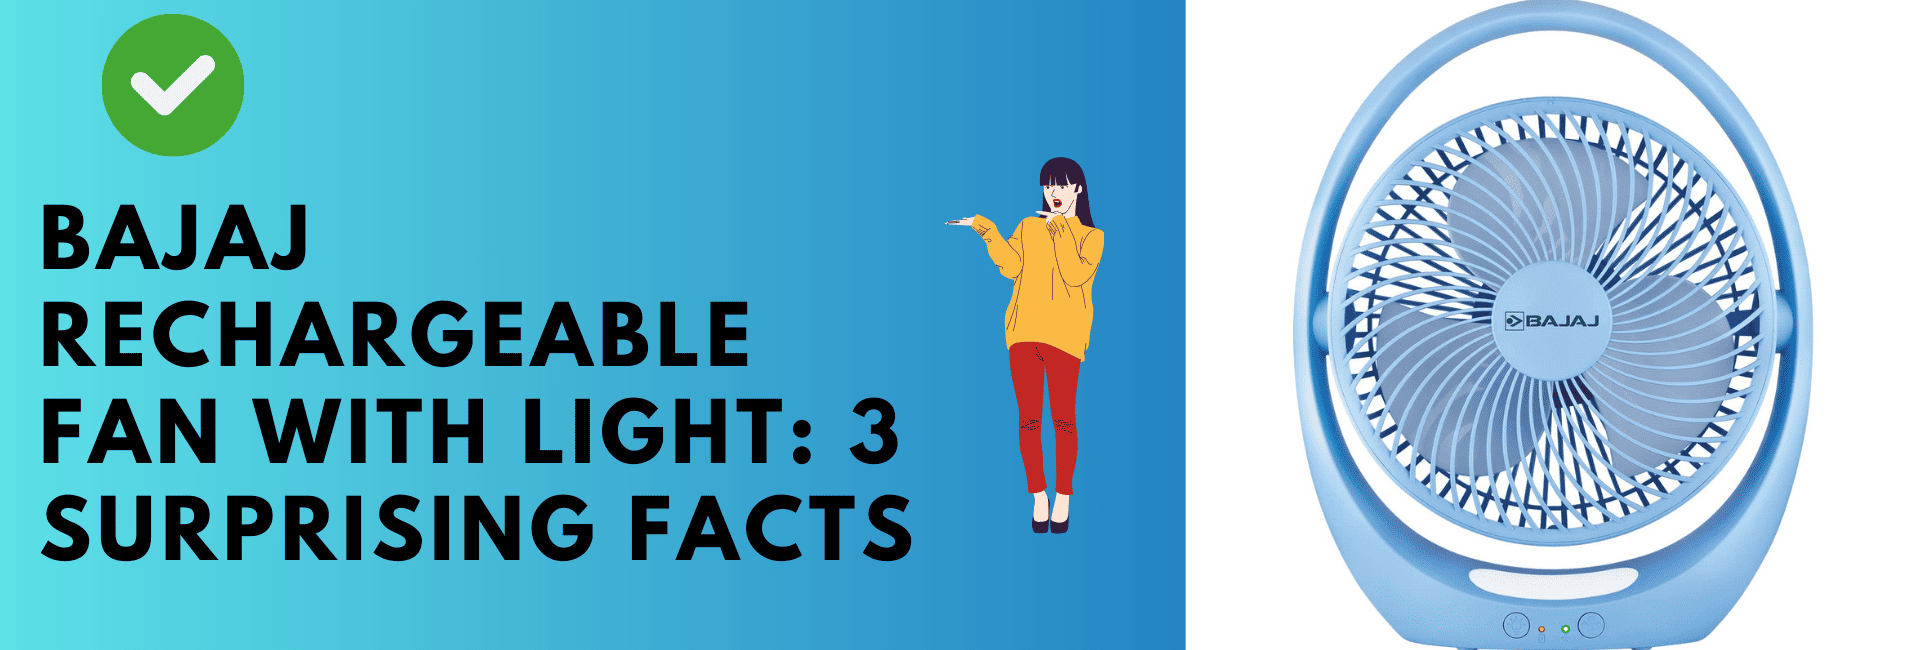 Bajaj Rechargeable Fan with Light: 3 Surprising Facts